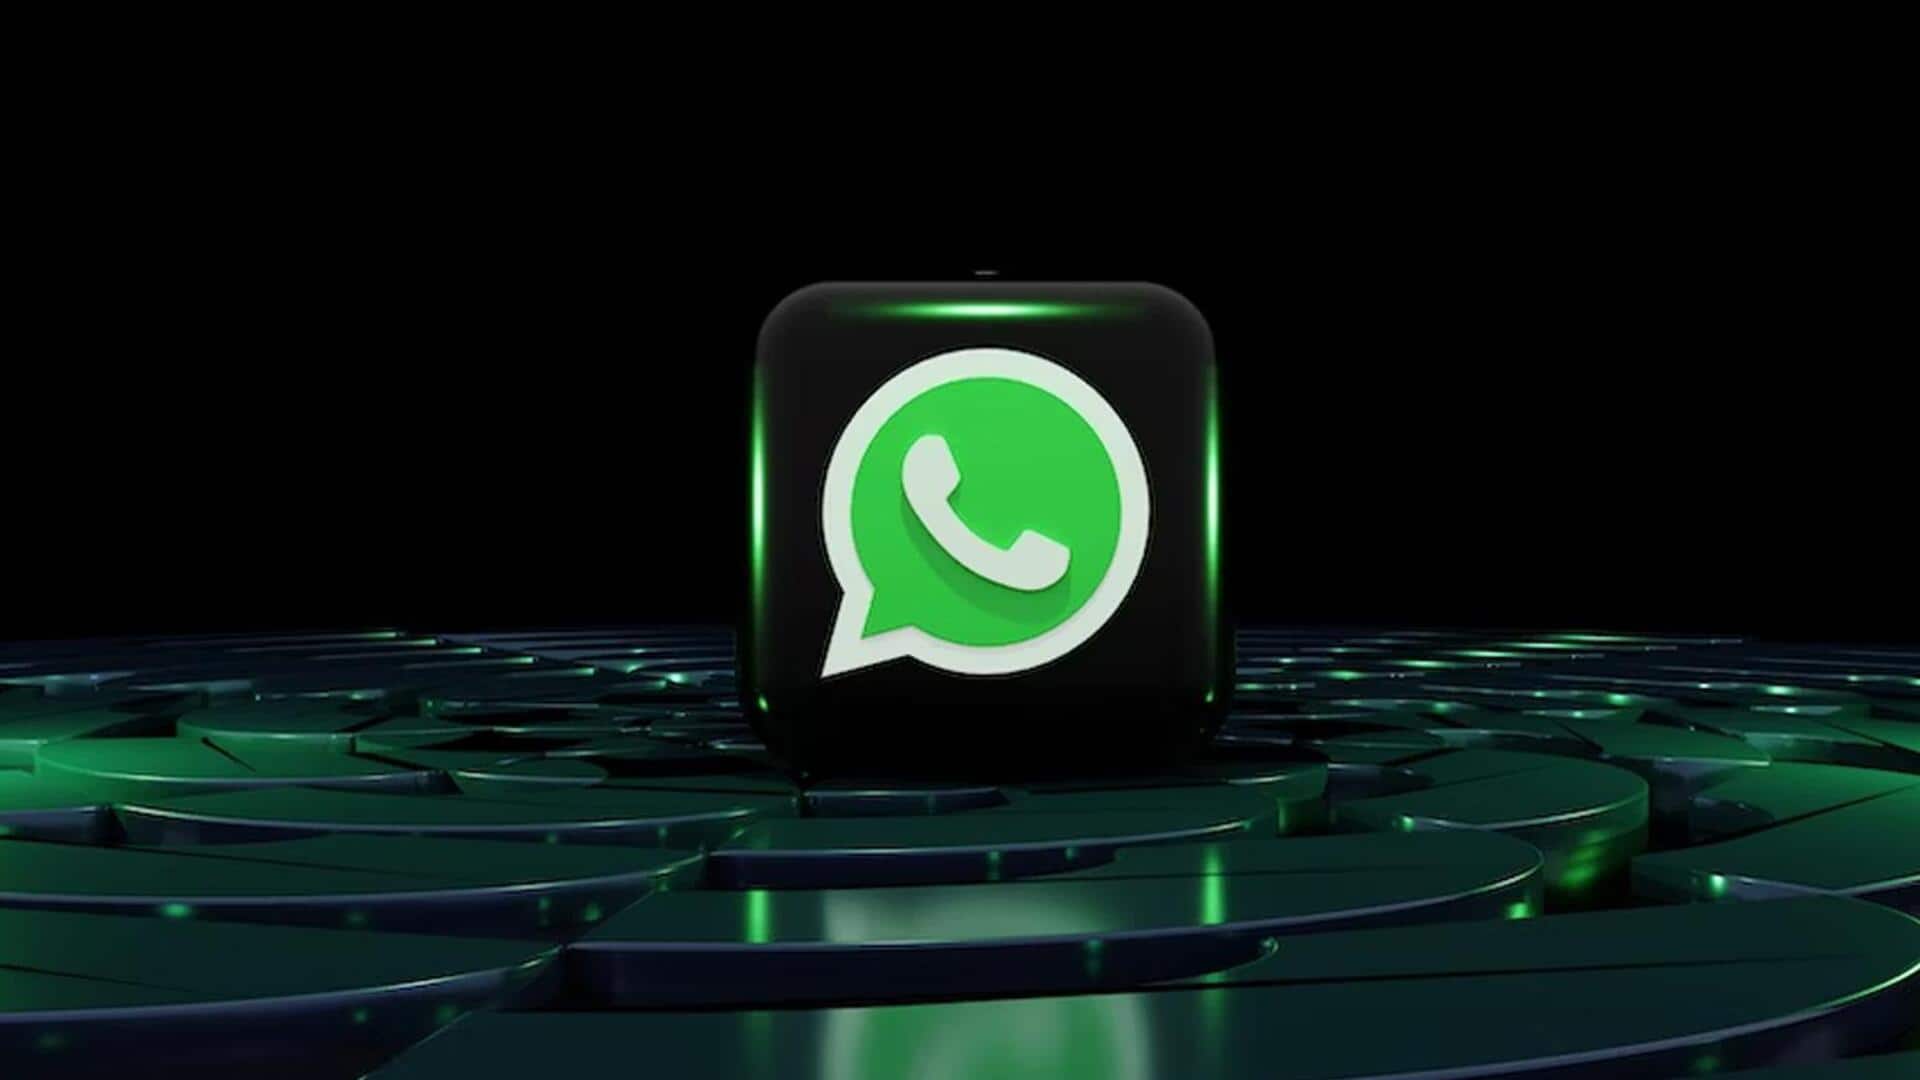 व्हाट्सऐप का नया फीचर: यूजर्स मैसेज फॉरवर्ड करते समय बना सकेंगे ग्रुप